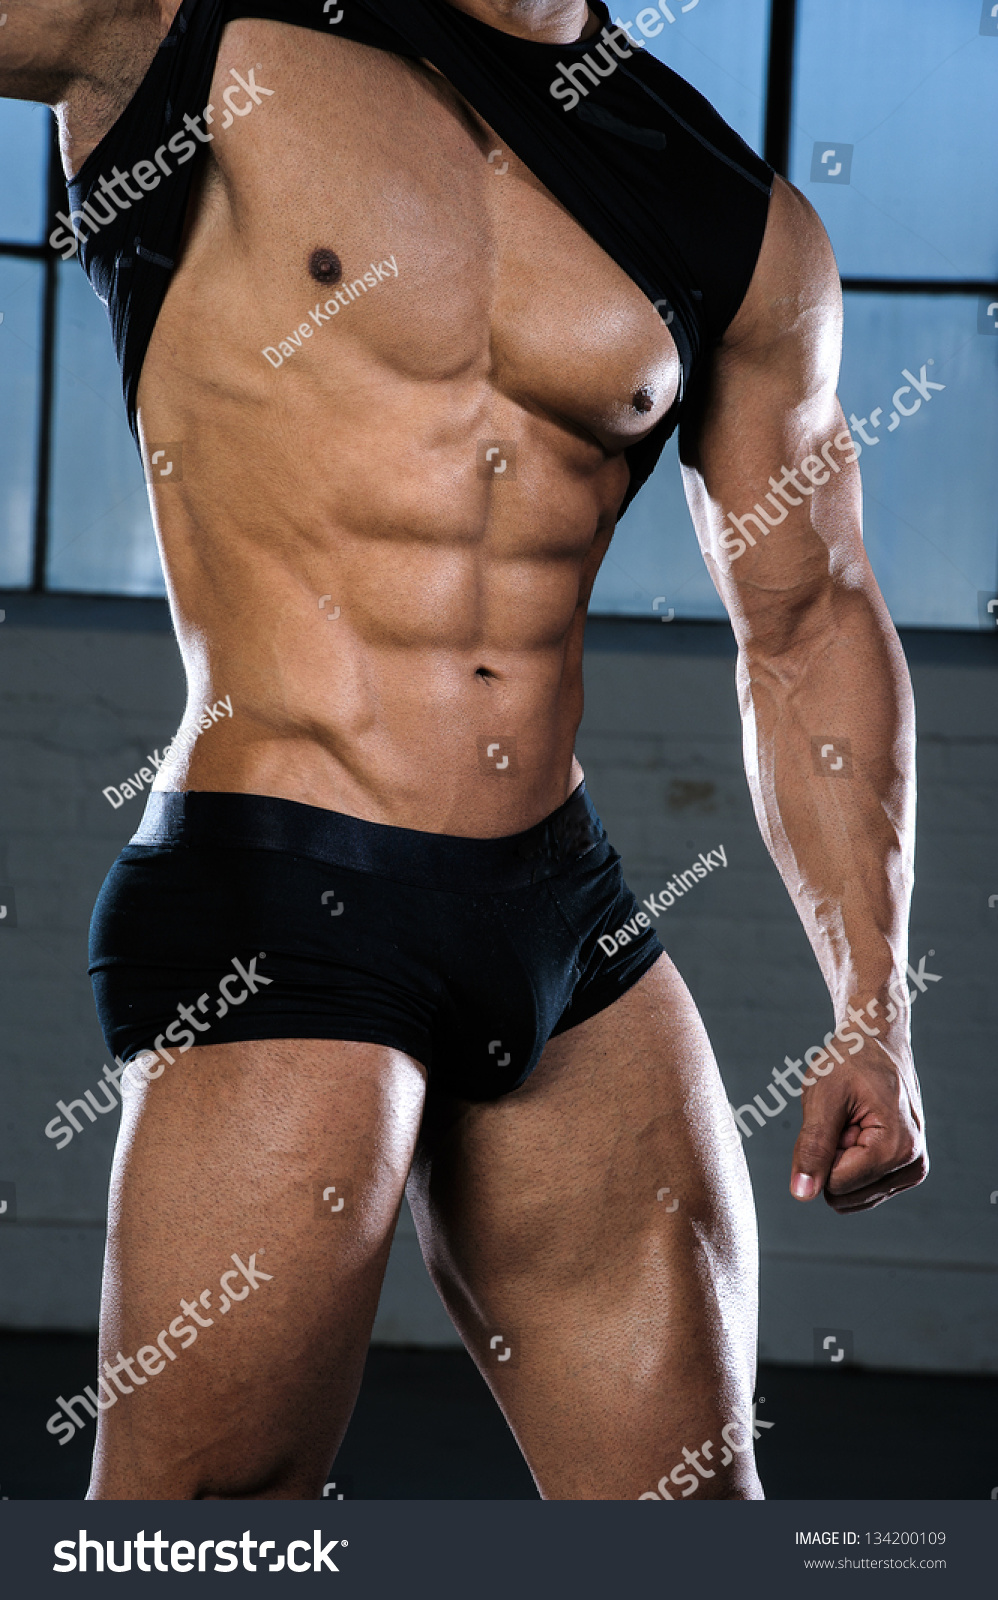 Male Fitness Model Standing On Black Stock Photo 554790091 